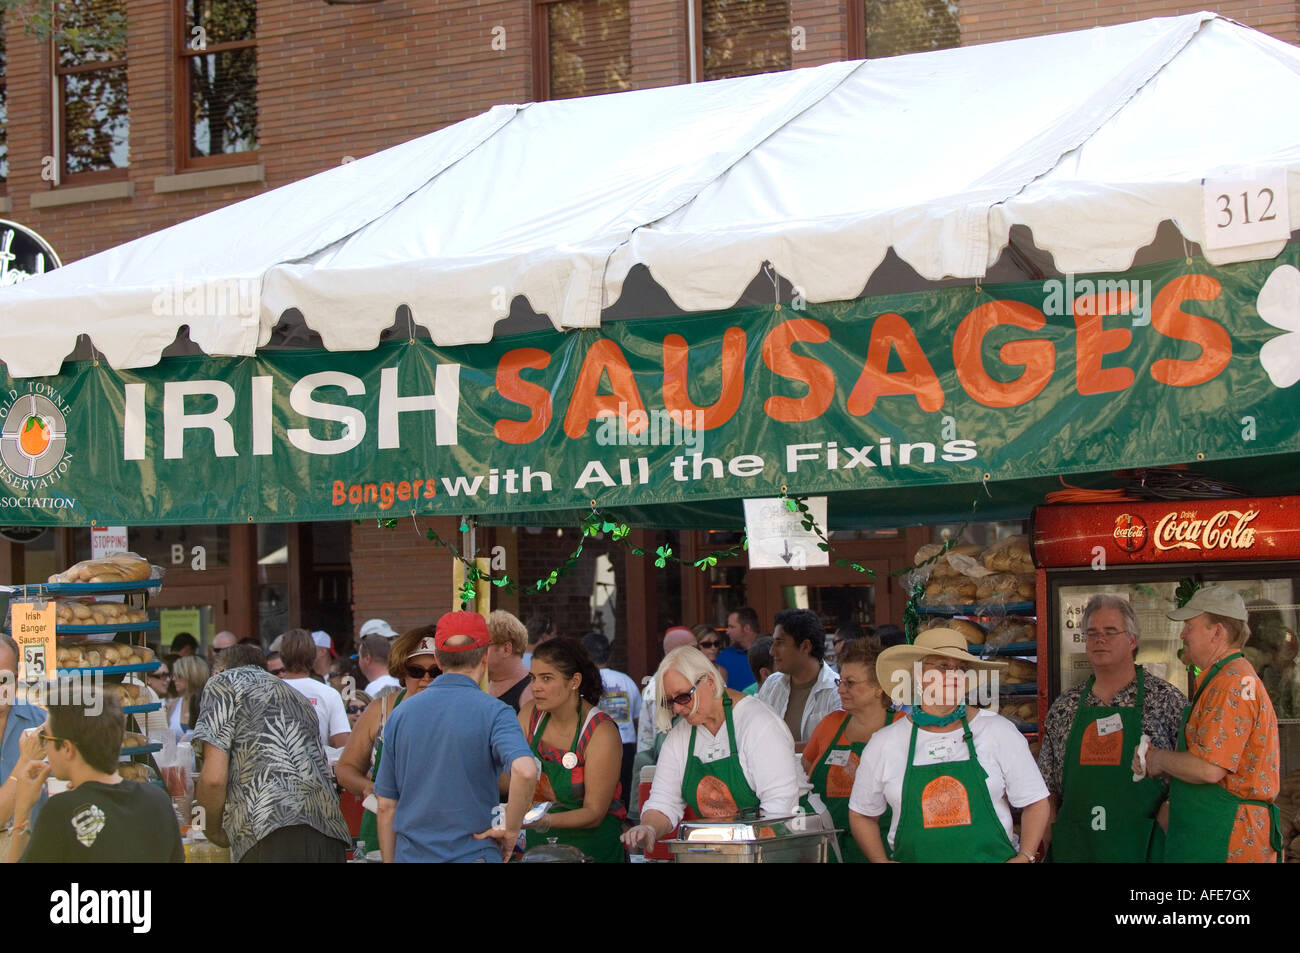 Irish Sausages for sale Stock Photo